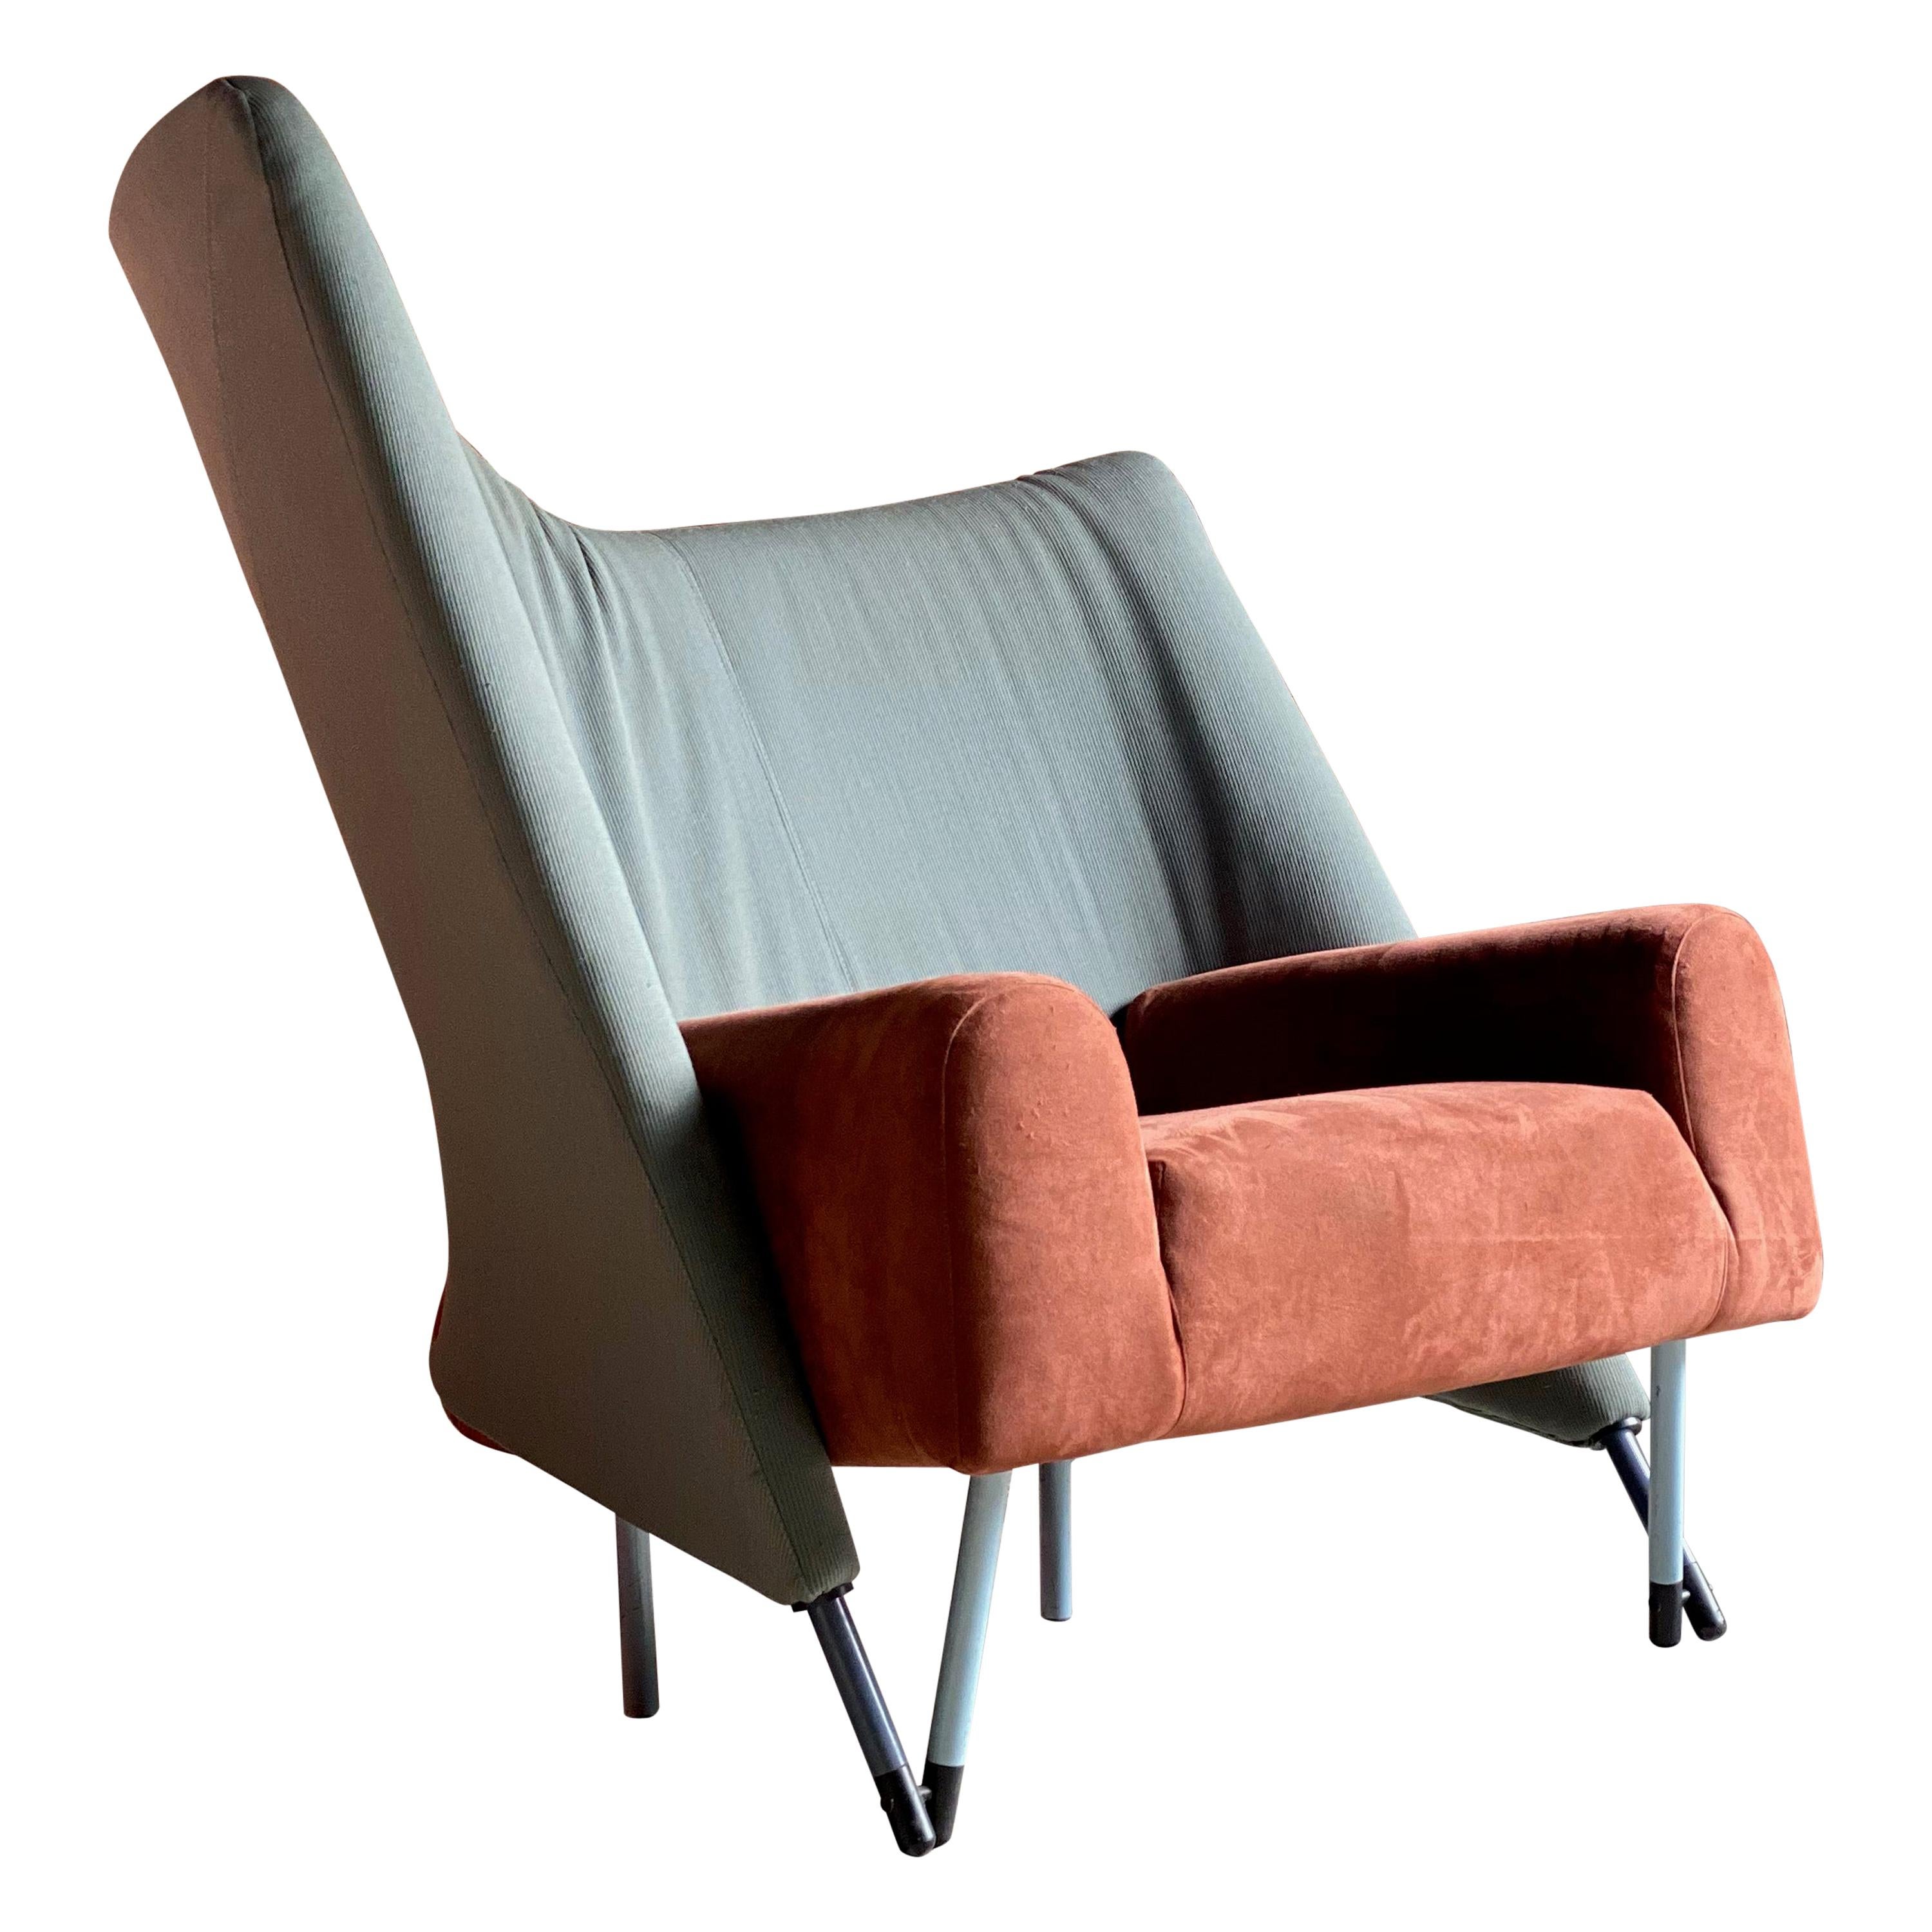 Paolo Deganello Torso 654 Lounge Chair by Cassina, circa 1982